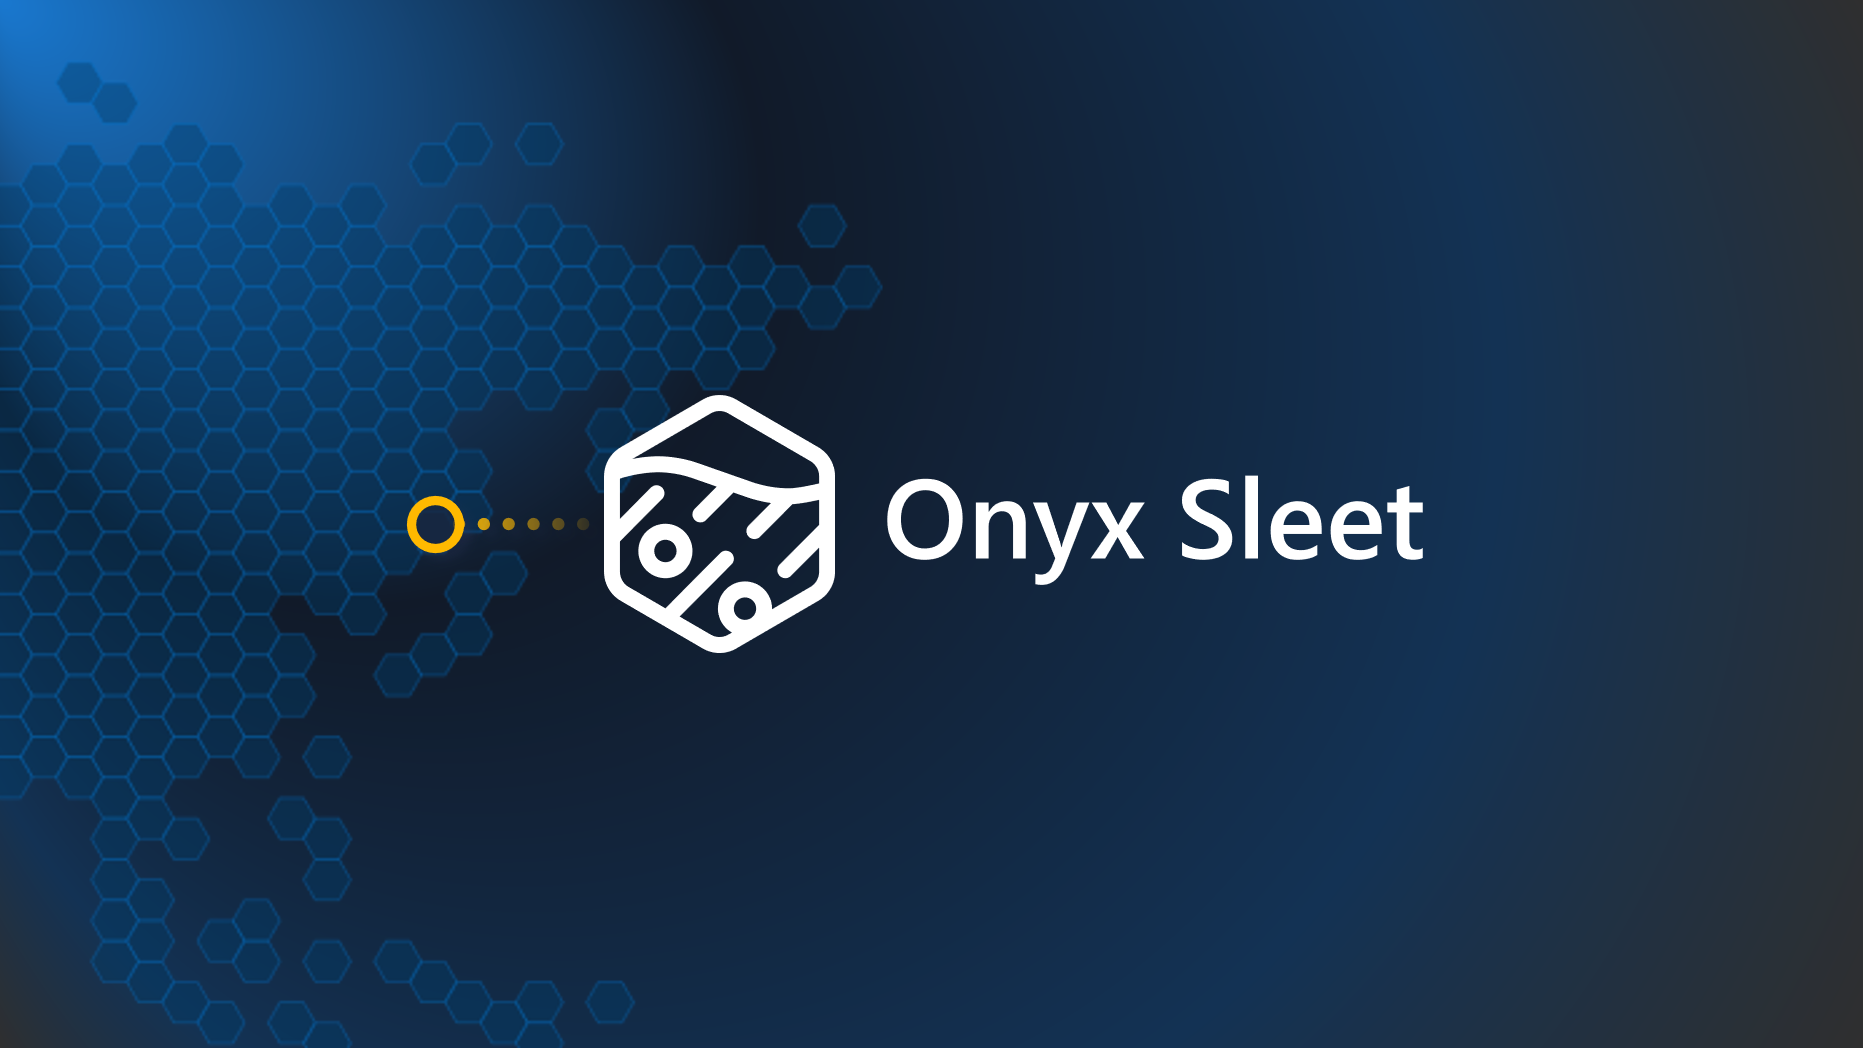 Onyx Sleet uses array of malware to gather intelligence for North Korea